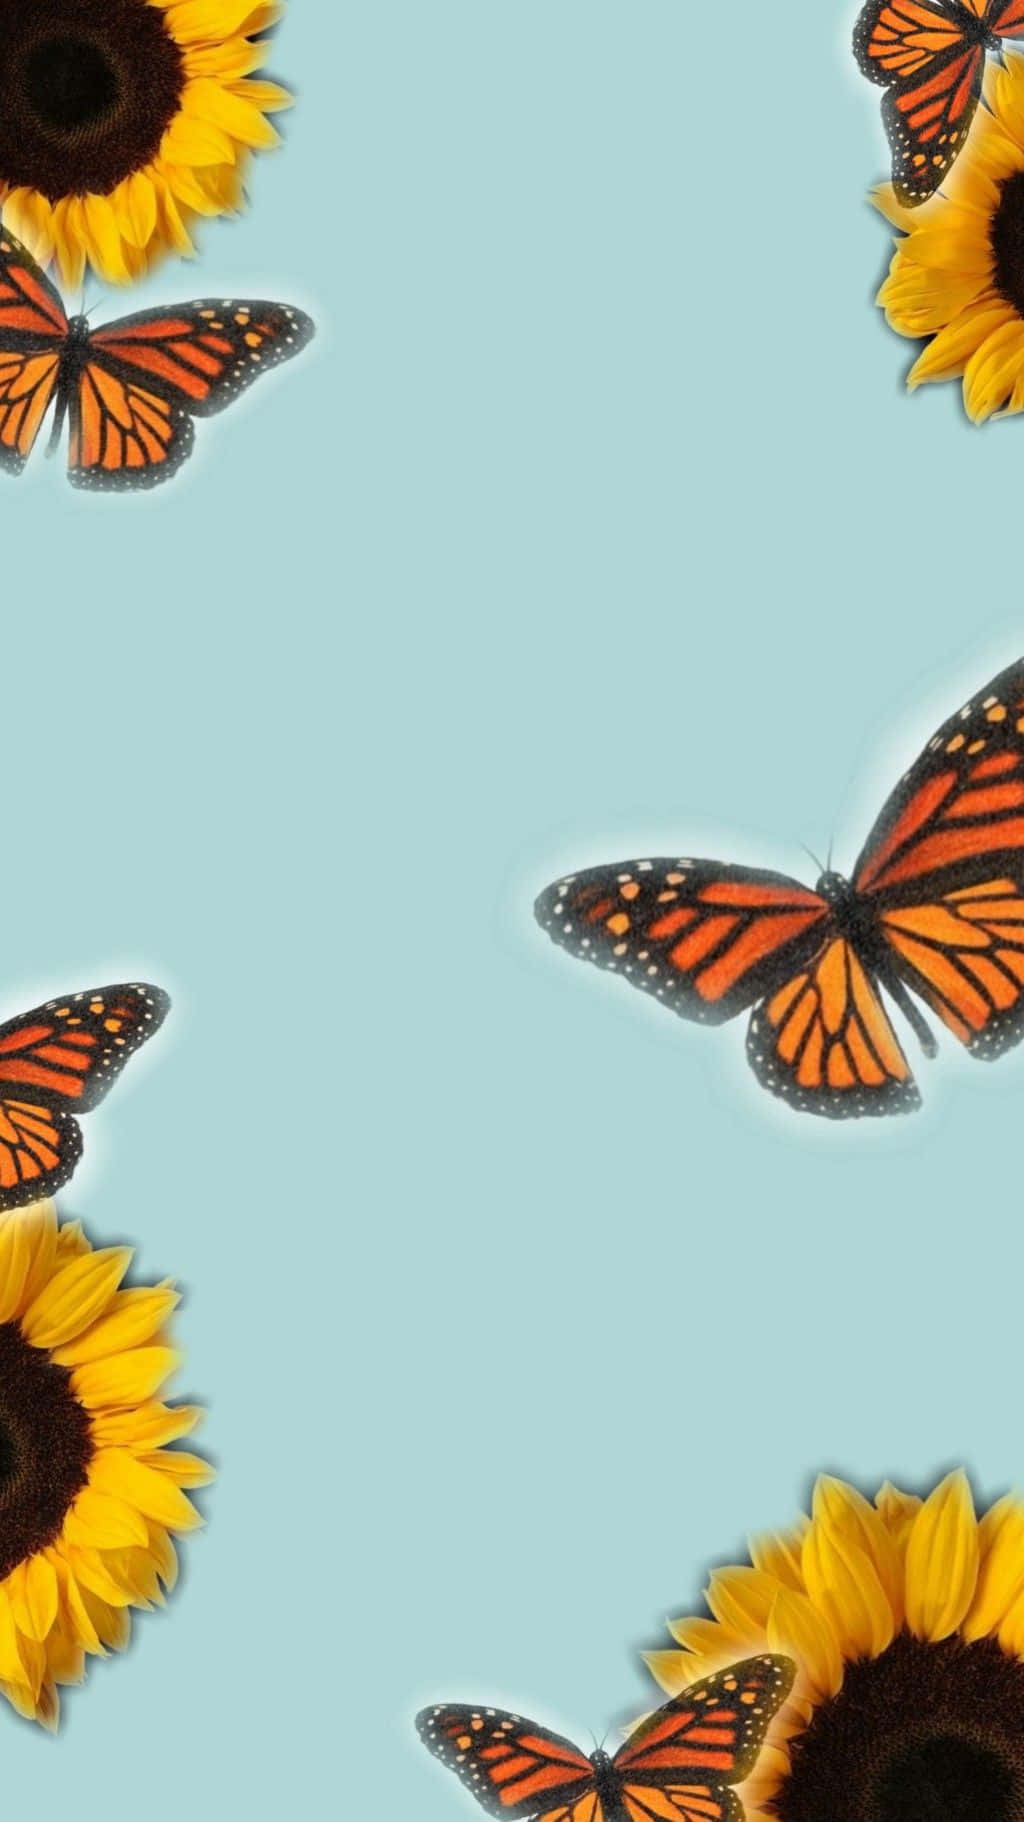 Butterflies With A Sunflower Aesthetic Iphone Wallpaper